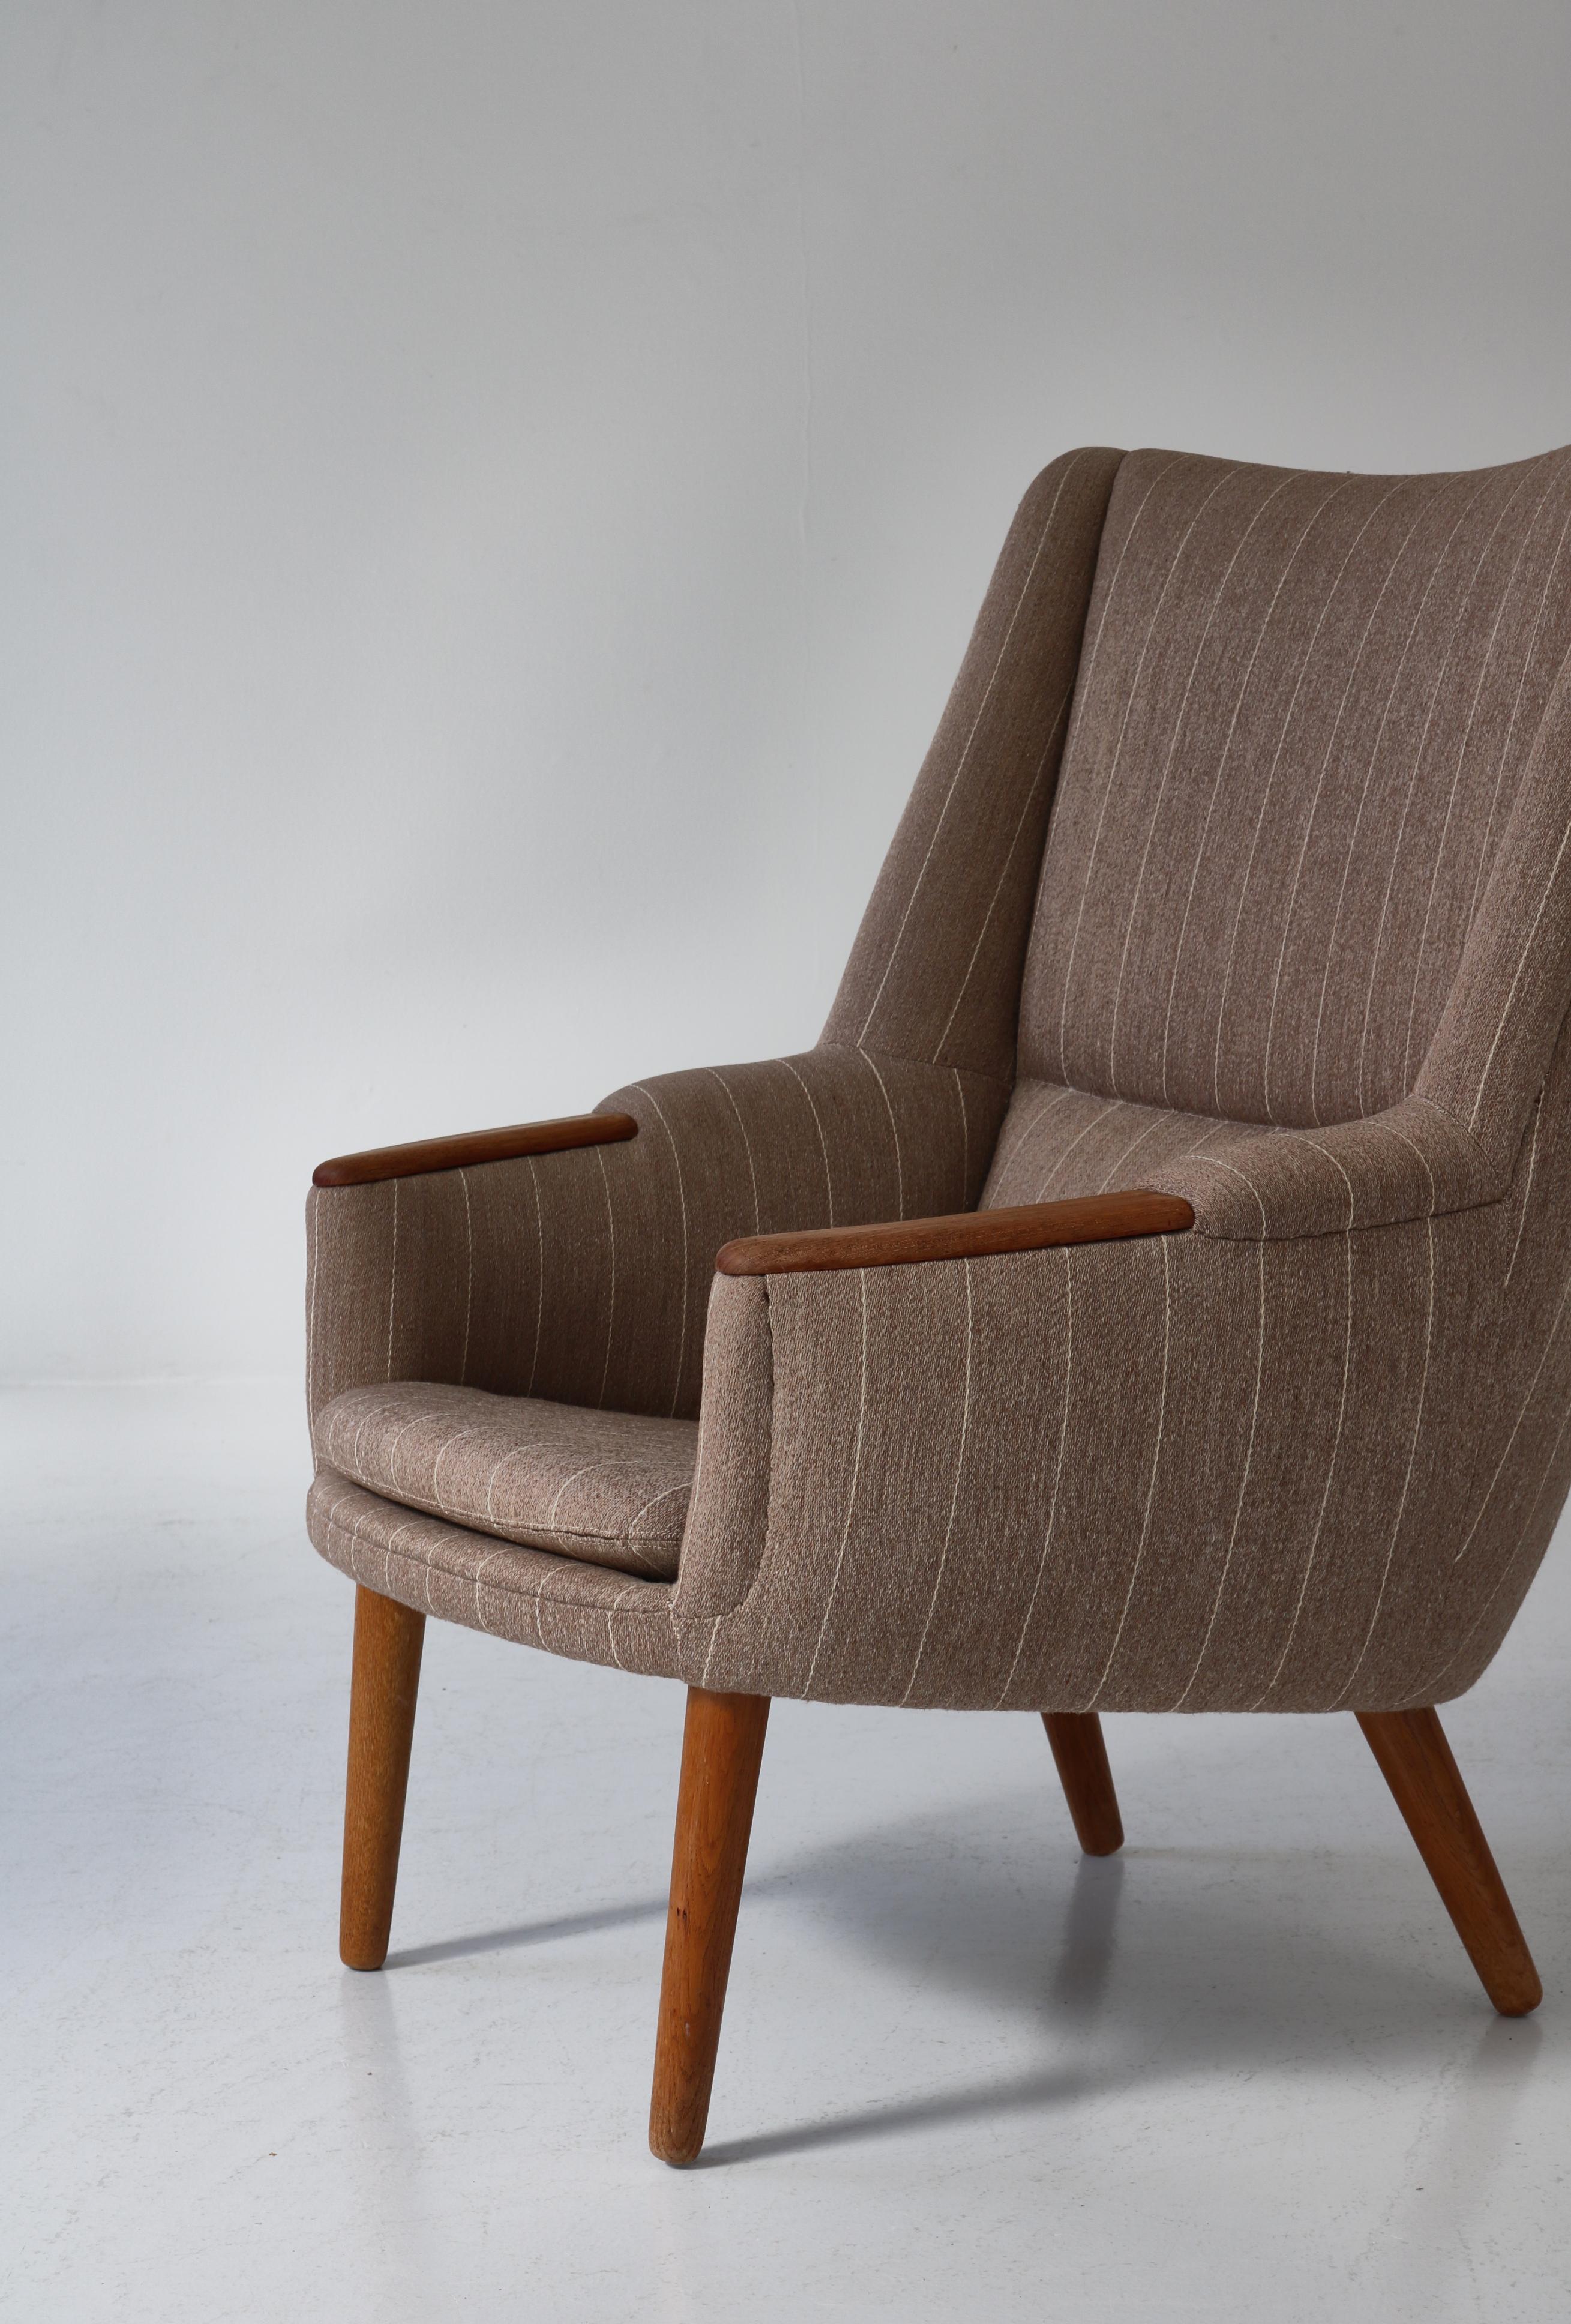 Danish Modern Highback Lounge Chair by Kurt Østervig, Teakwood & Oak, 1958 In Good Condition For Sale In Odense, DK